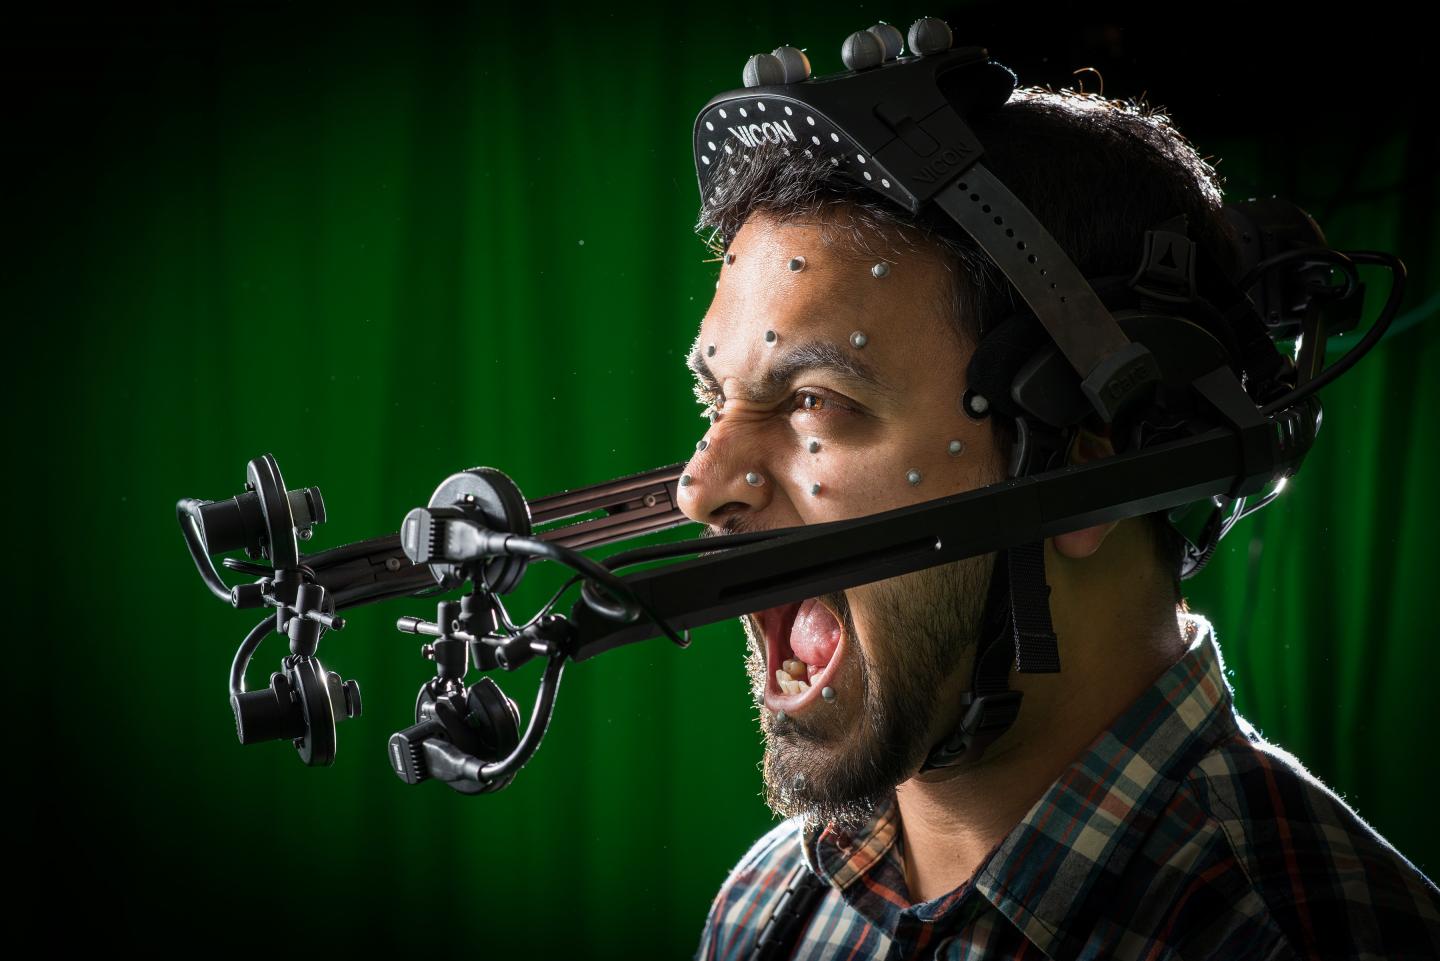 Motion Capture Headset to Capture Fine Facial Movements